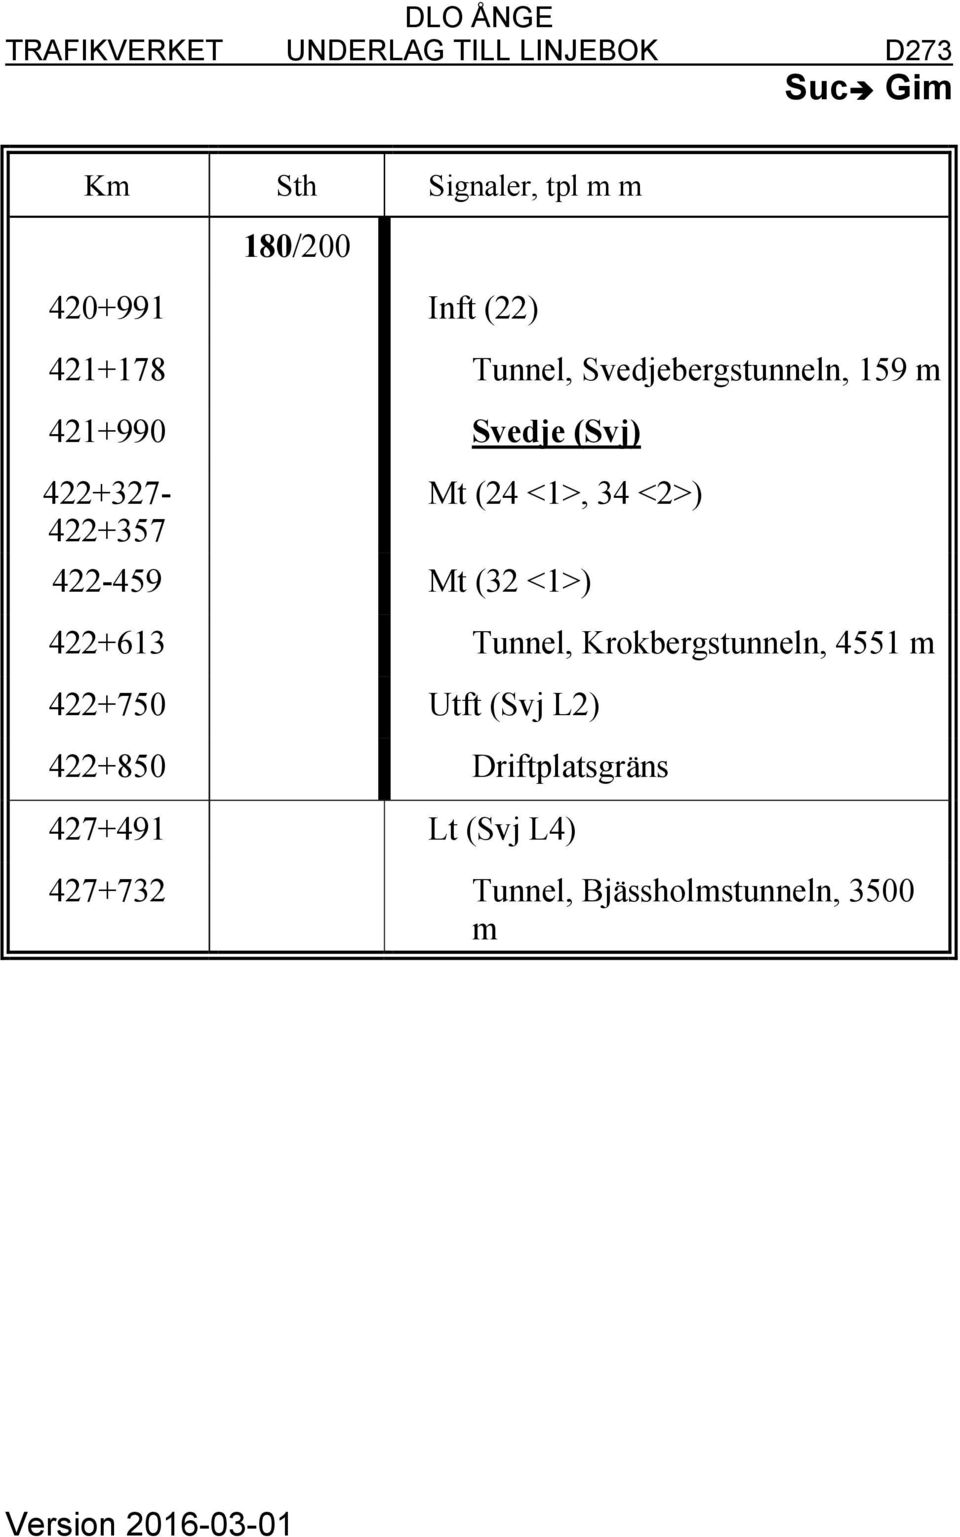 Mt (32 <1>) 422+613 Tunnel, Krokbergstunneln, 4551 m 422+750 Utft (Svj L2) 422+850